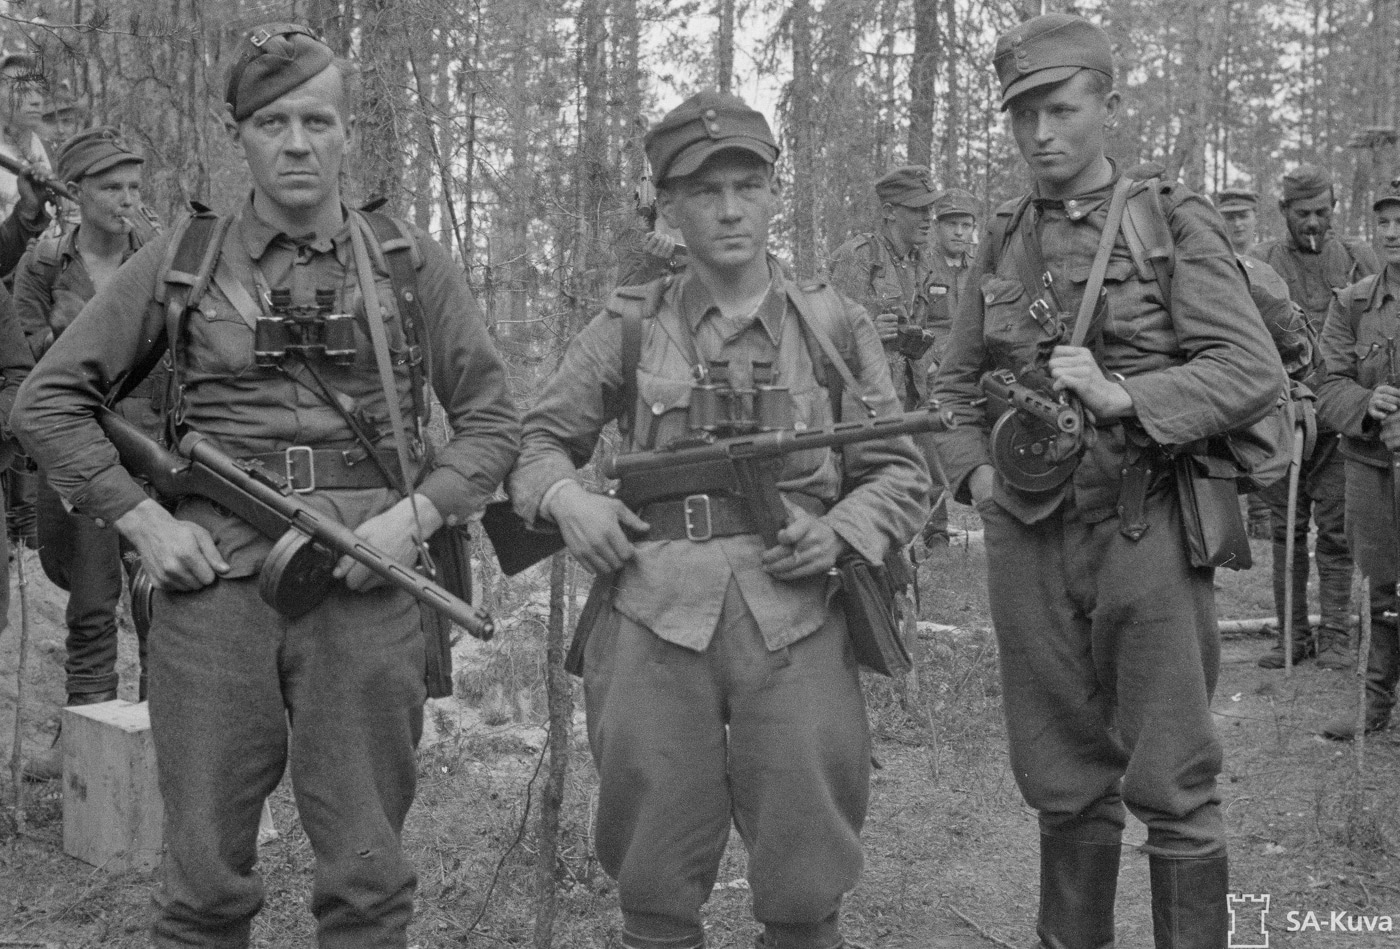 suomi kp/-31 smg submachine gun finland army winter war continuation war